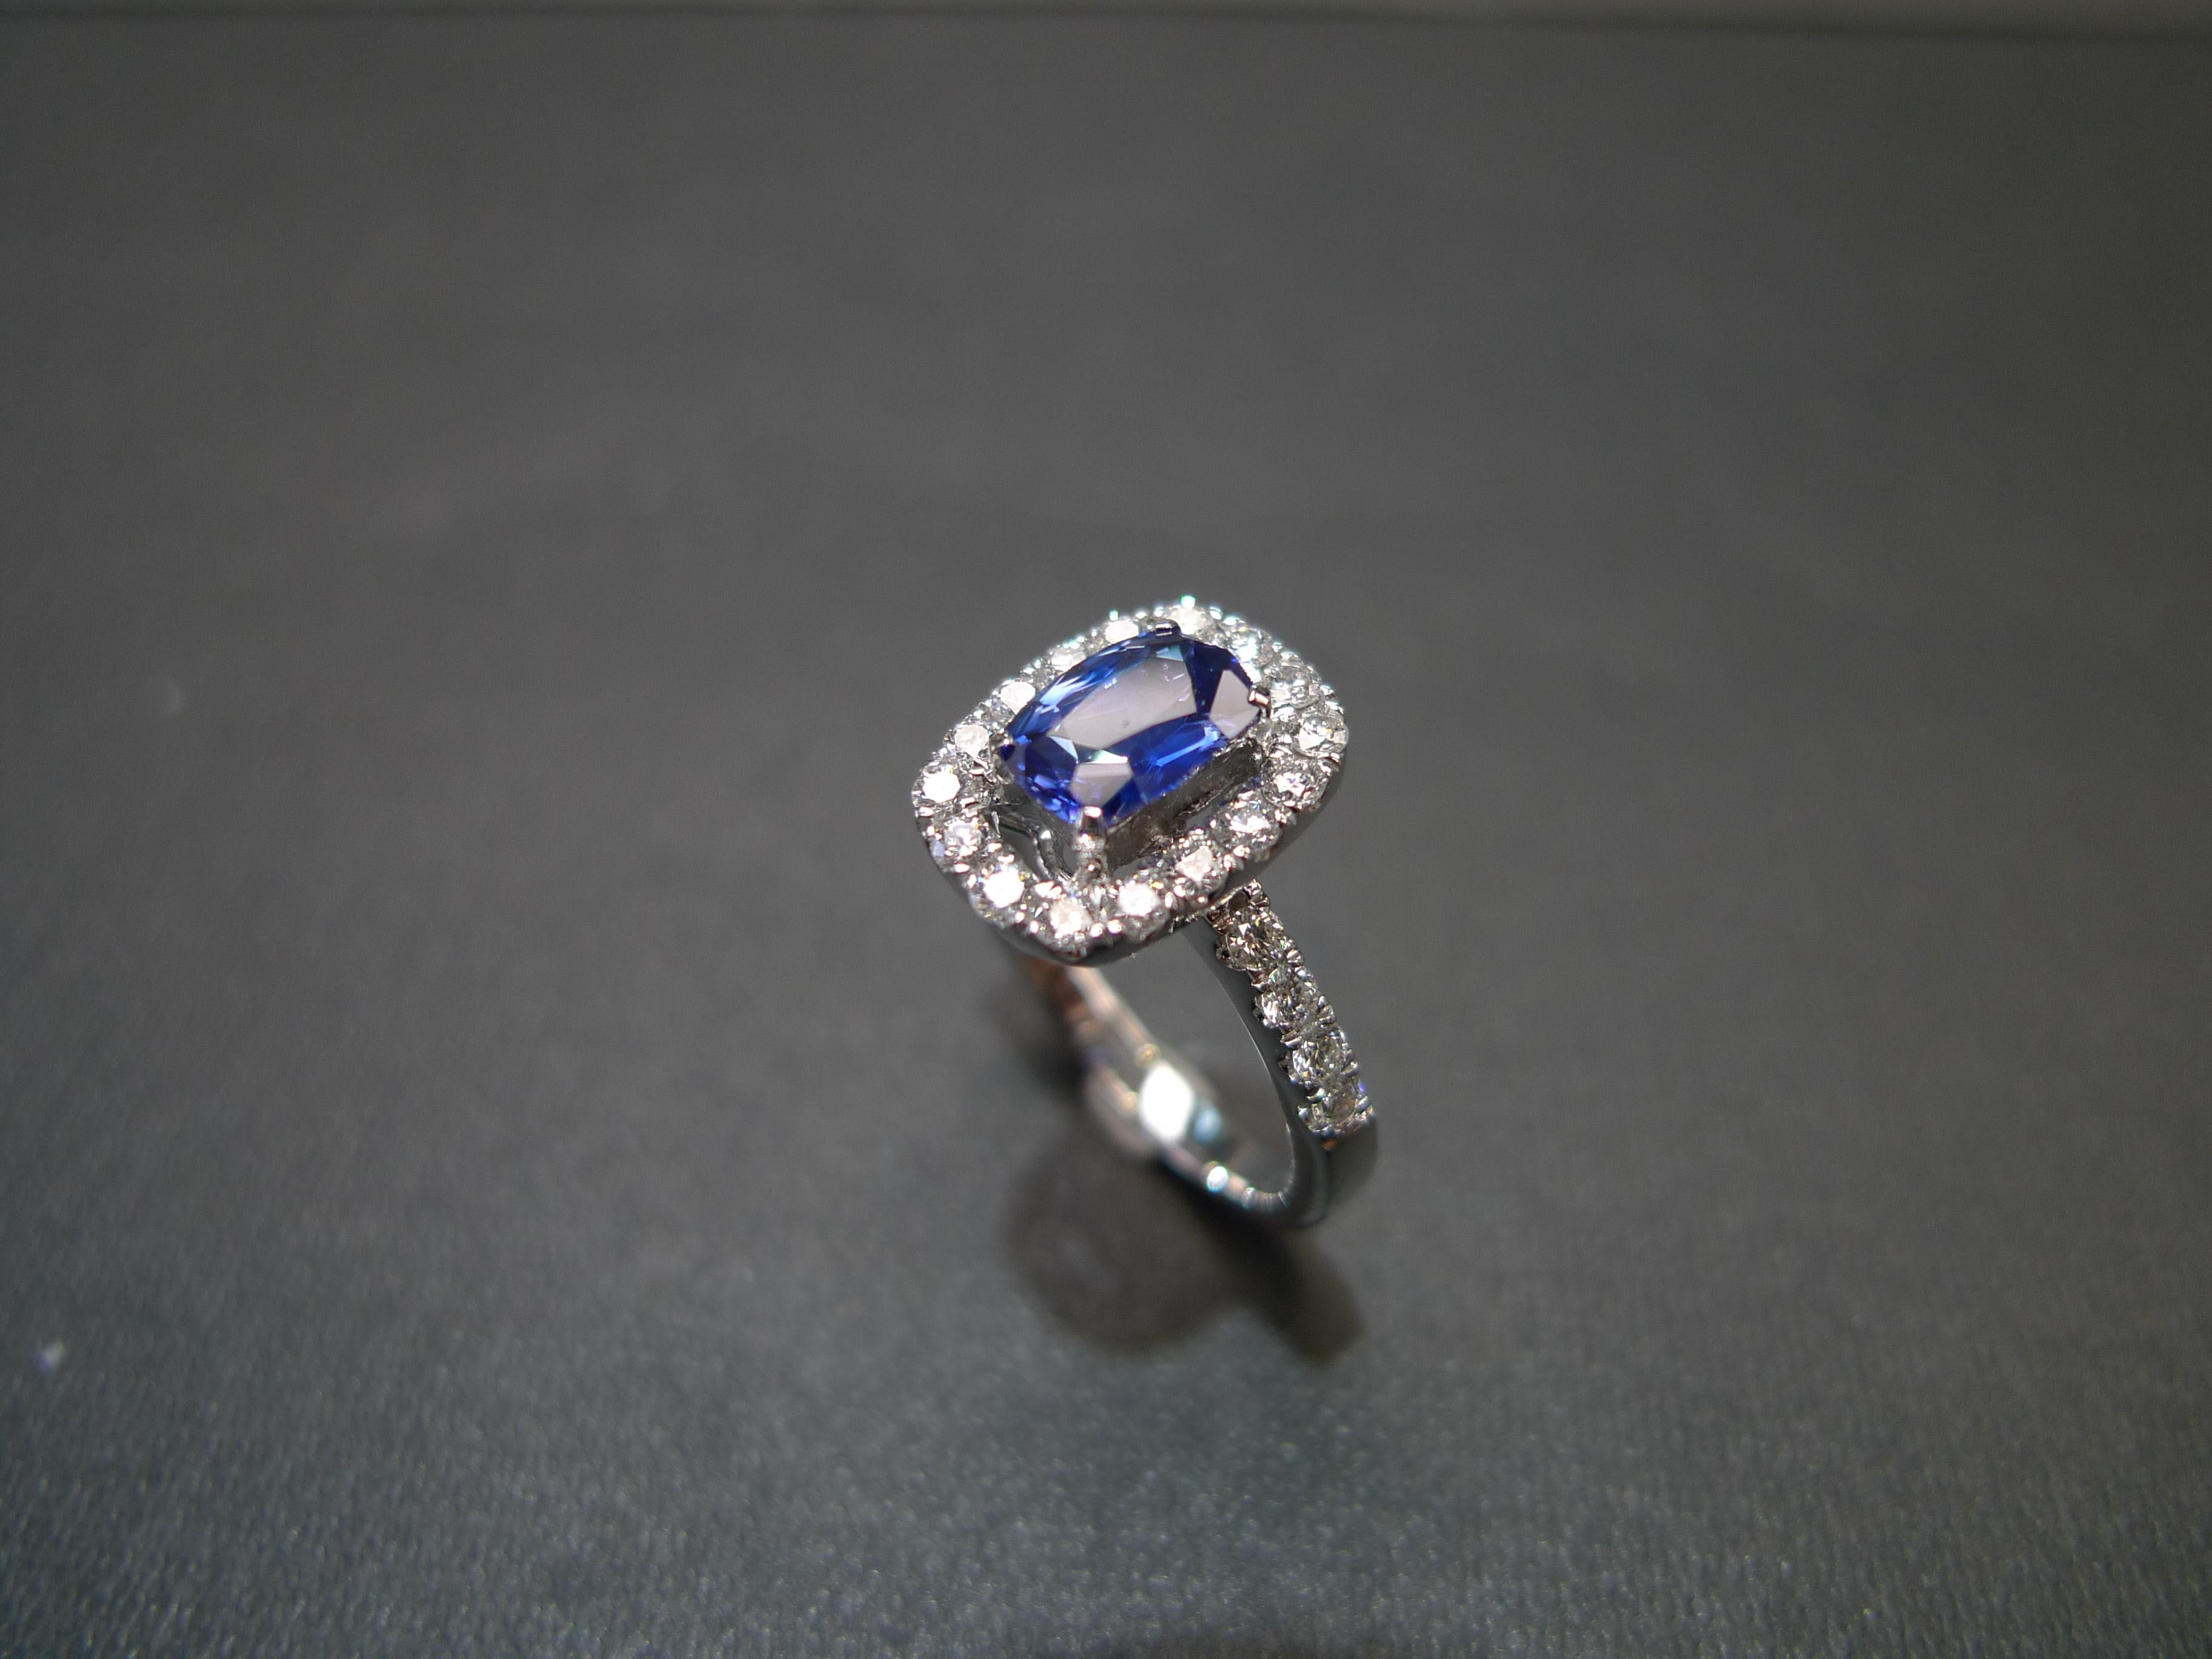 For Sale:  Cushion Cut Natural Burma Blue Sapphire Diamond Halo Engagement Ring White Gold 10